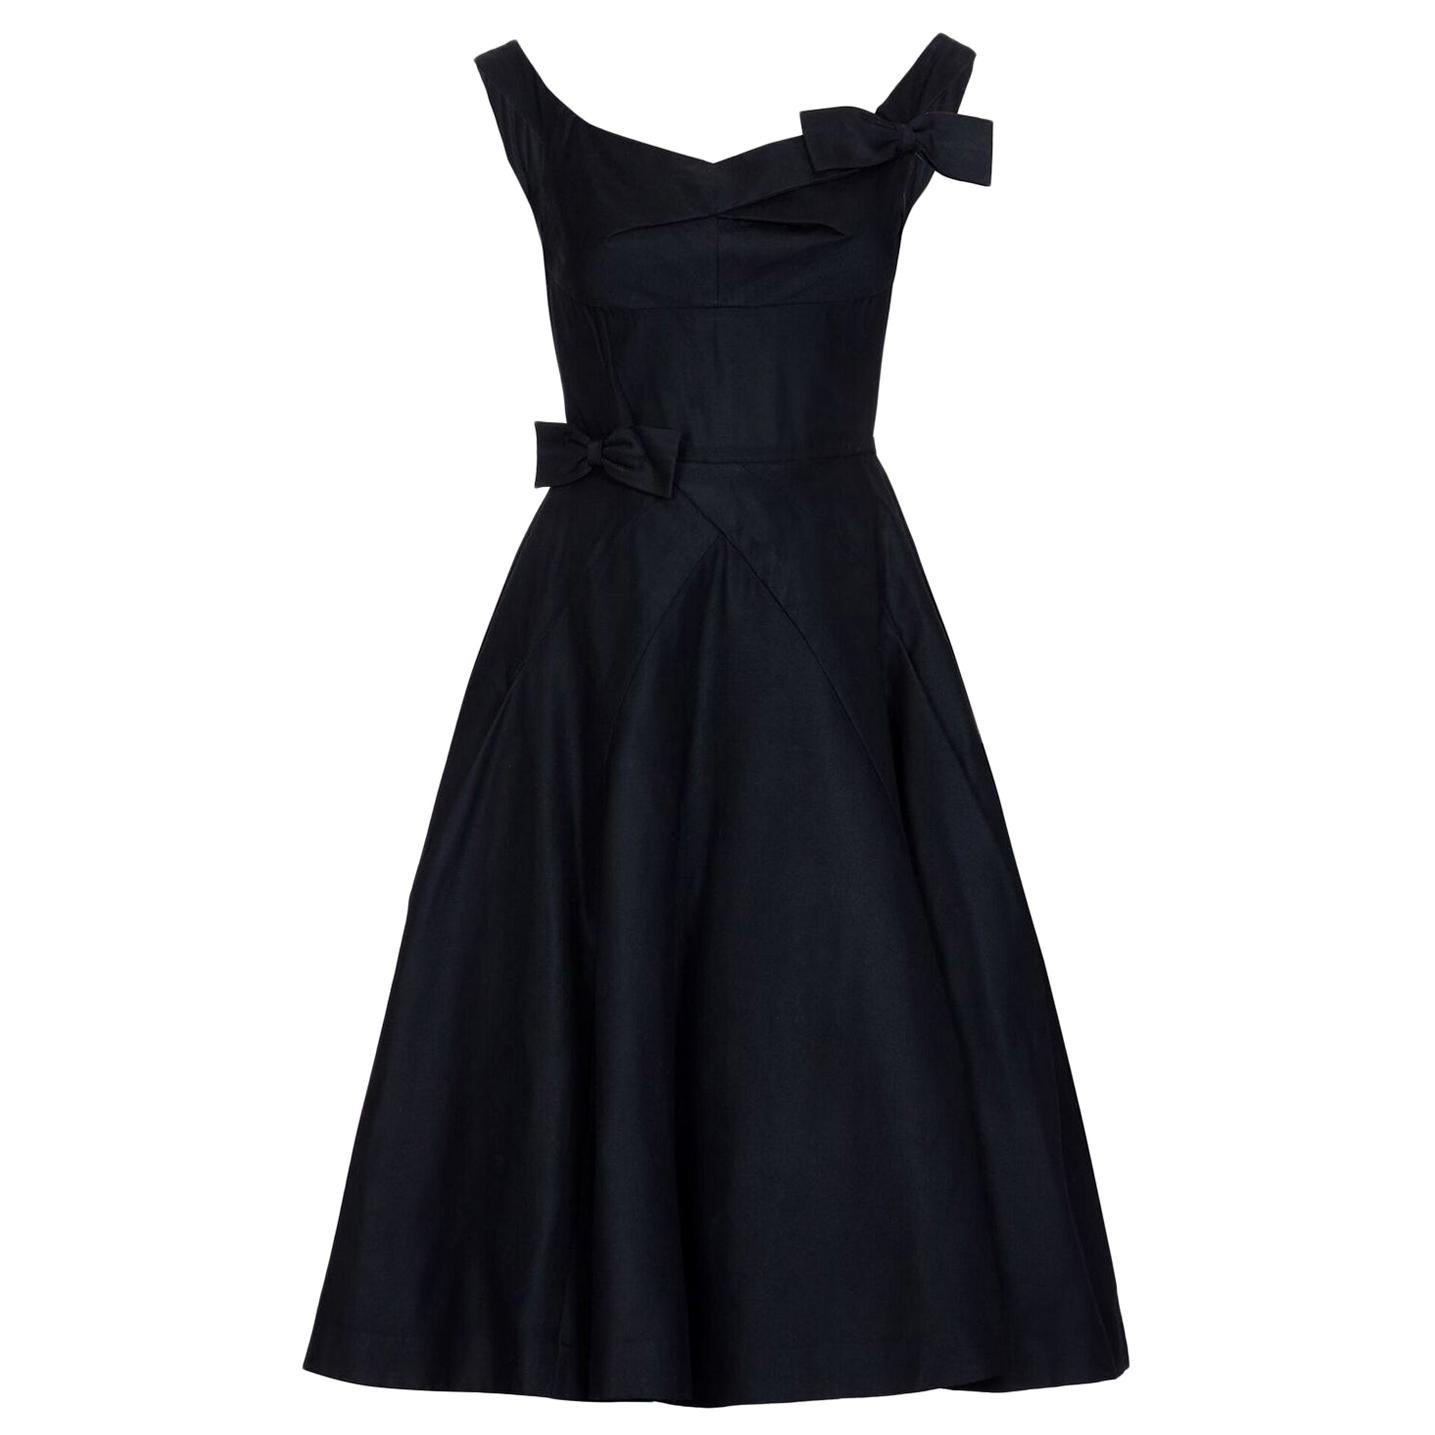 1950s Jacques Heim New Look Black Dress